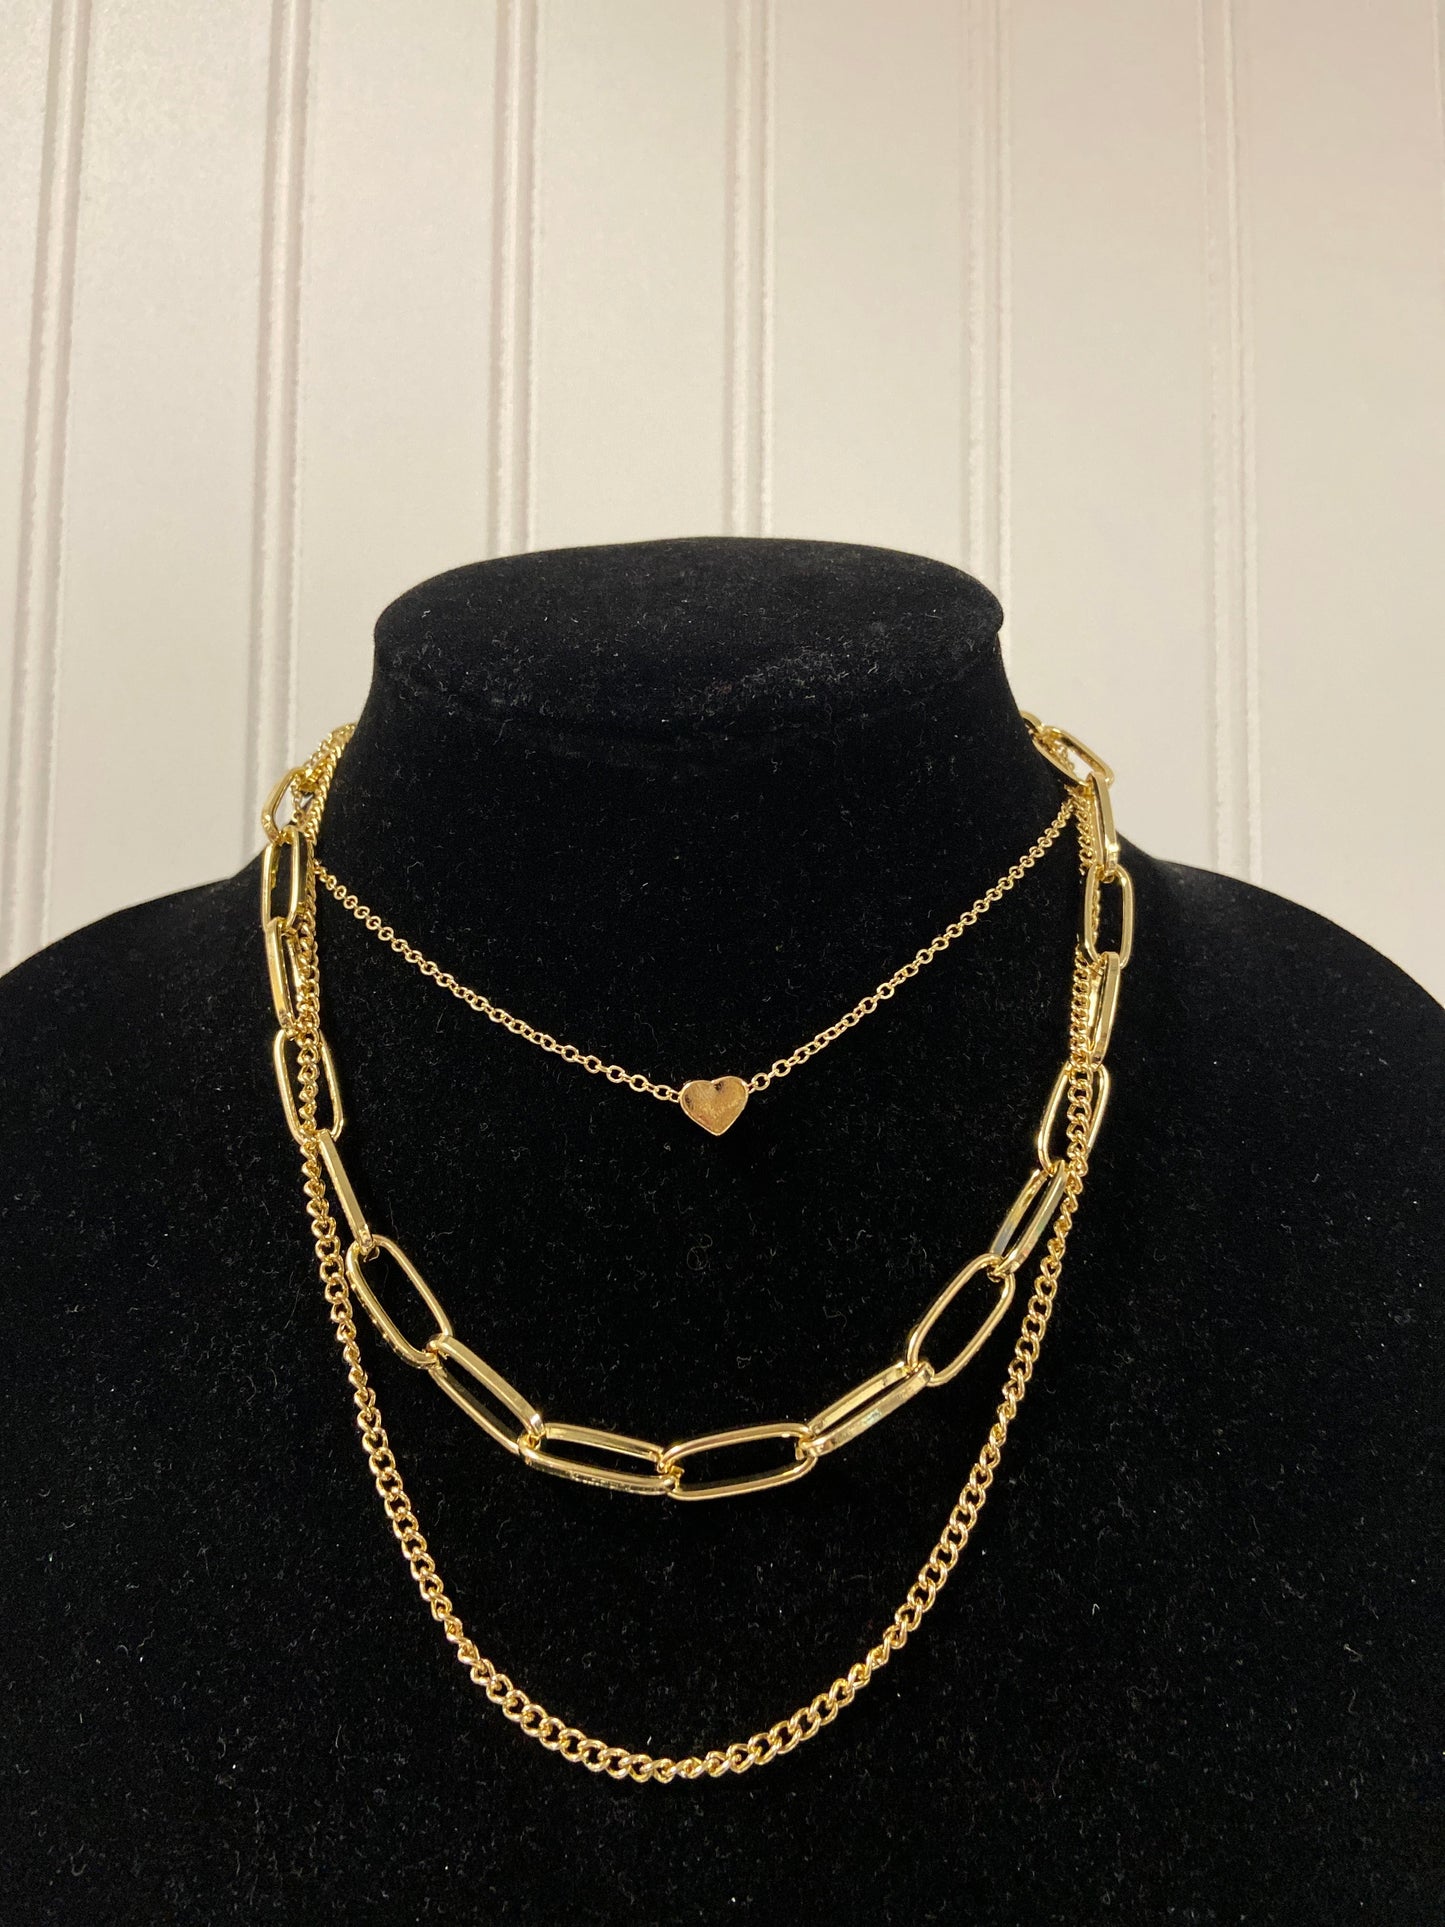 Necklace Layered By Catherine Malandrino  Size: 1